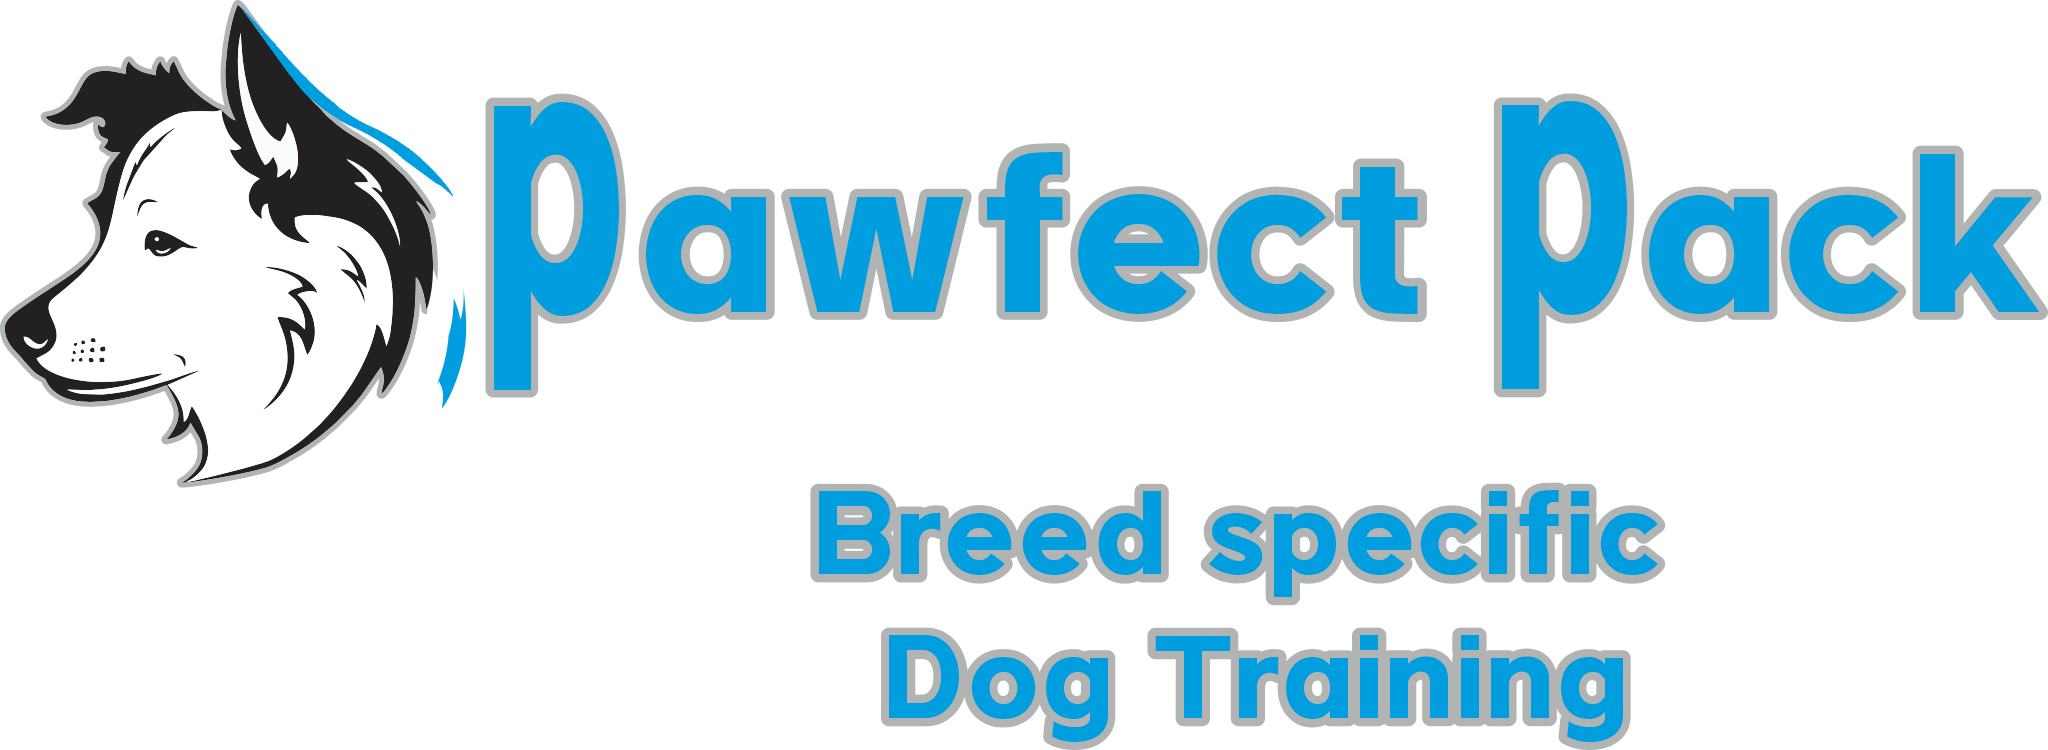 Pawfect Pack Dog Training